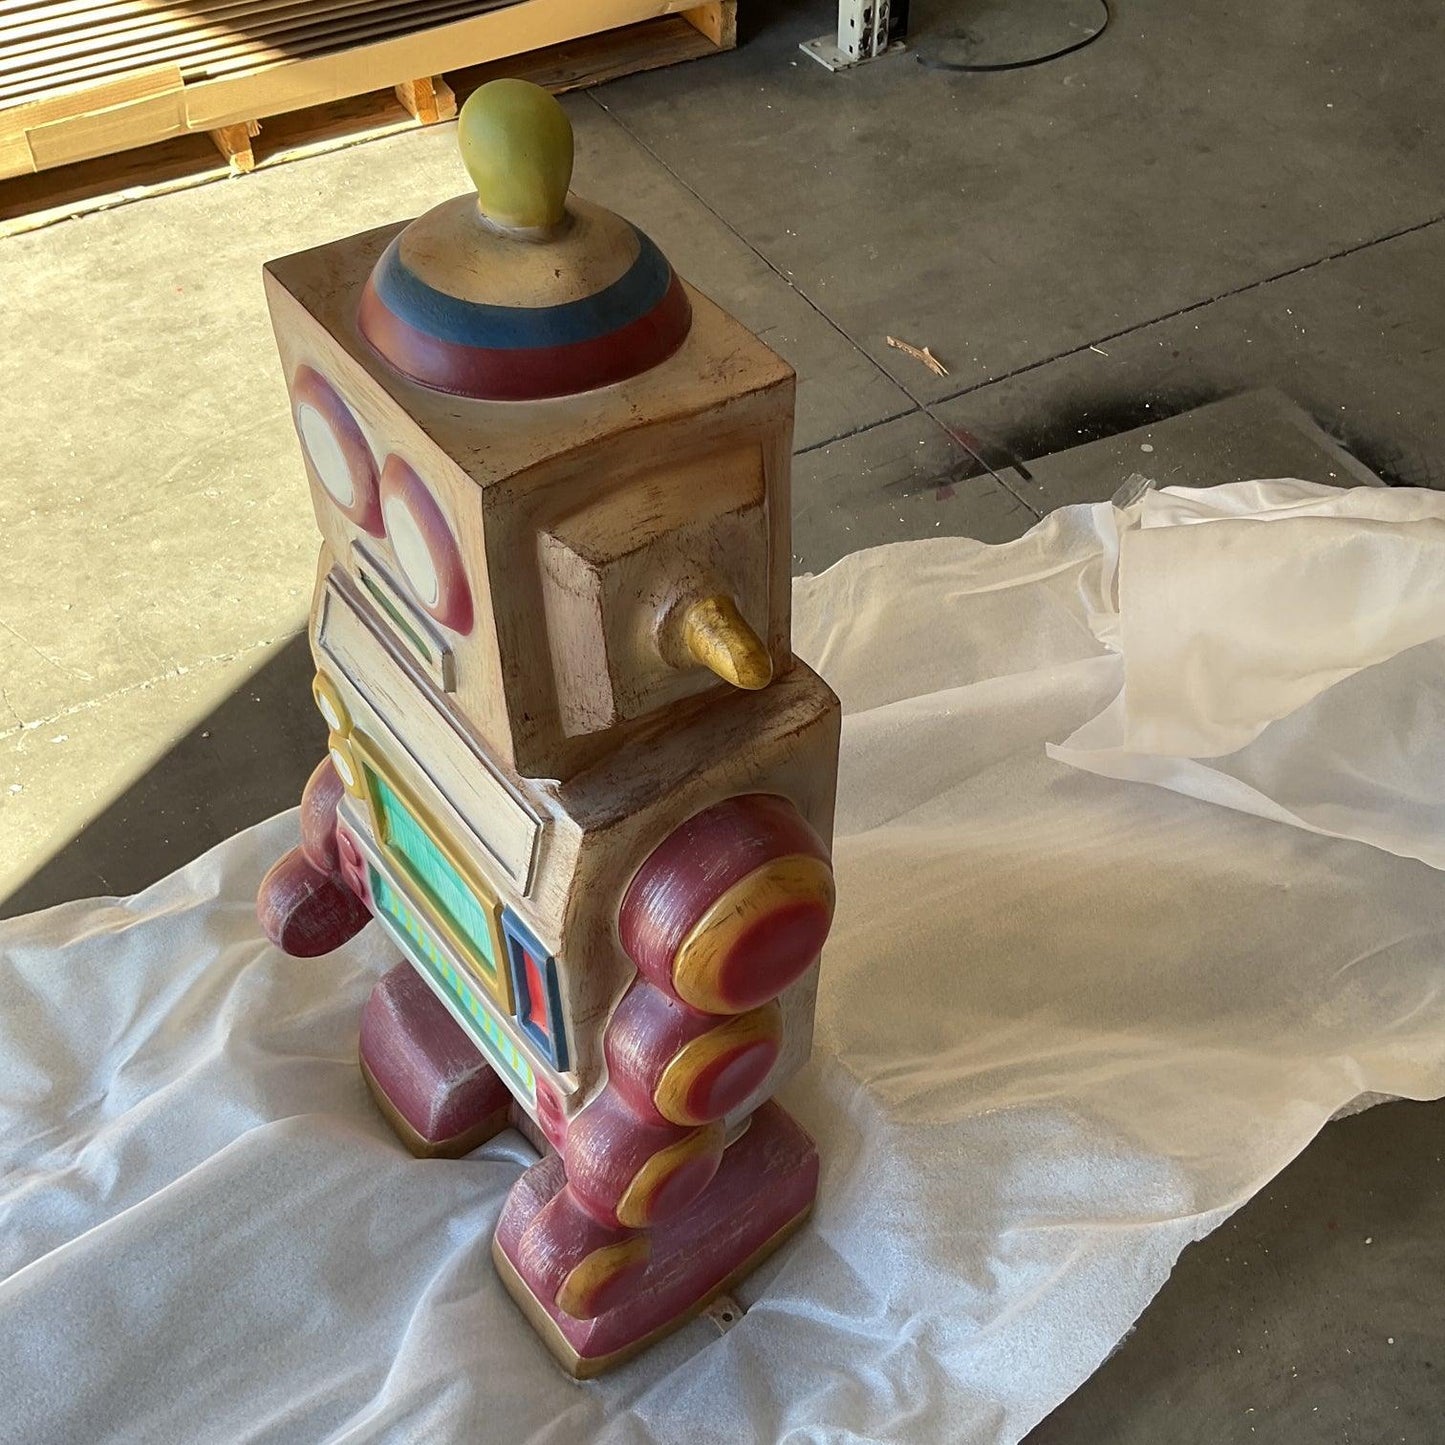 Toy Robot Over Sized Statue - LM Treasures Prop Rentals 